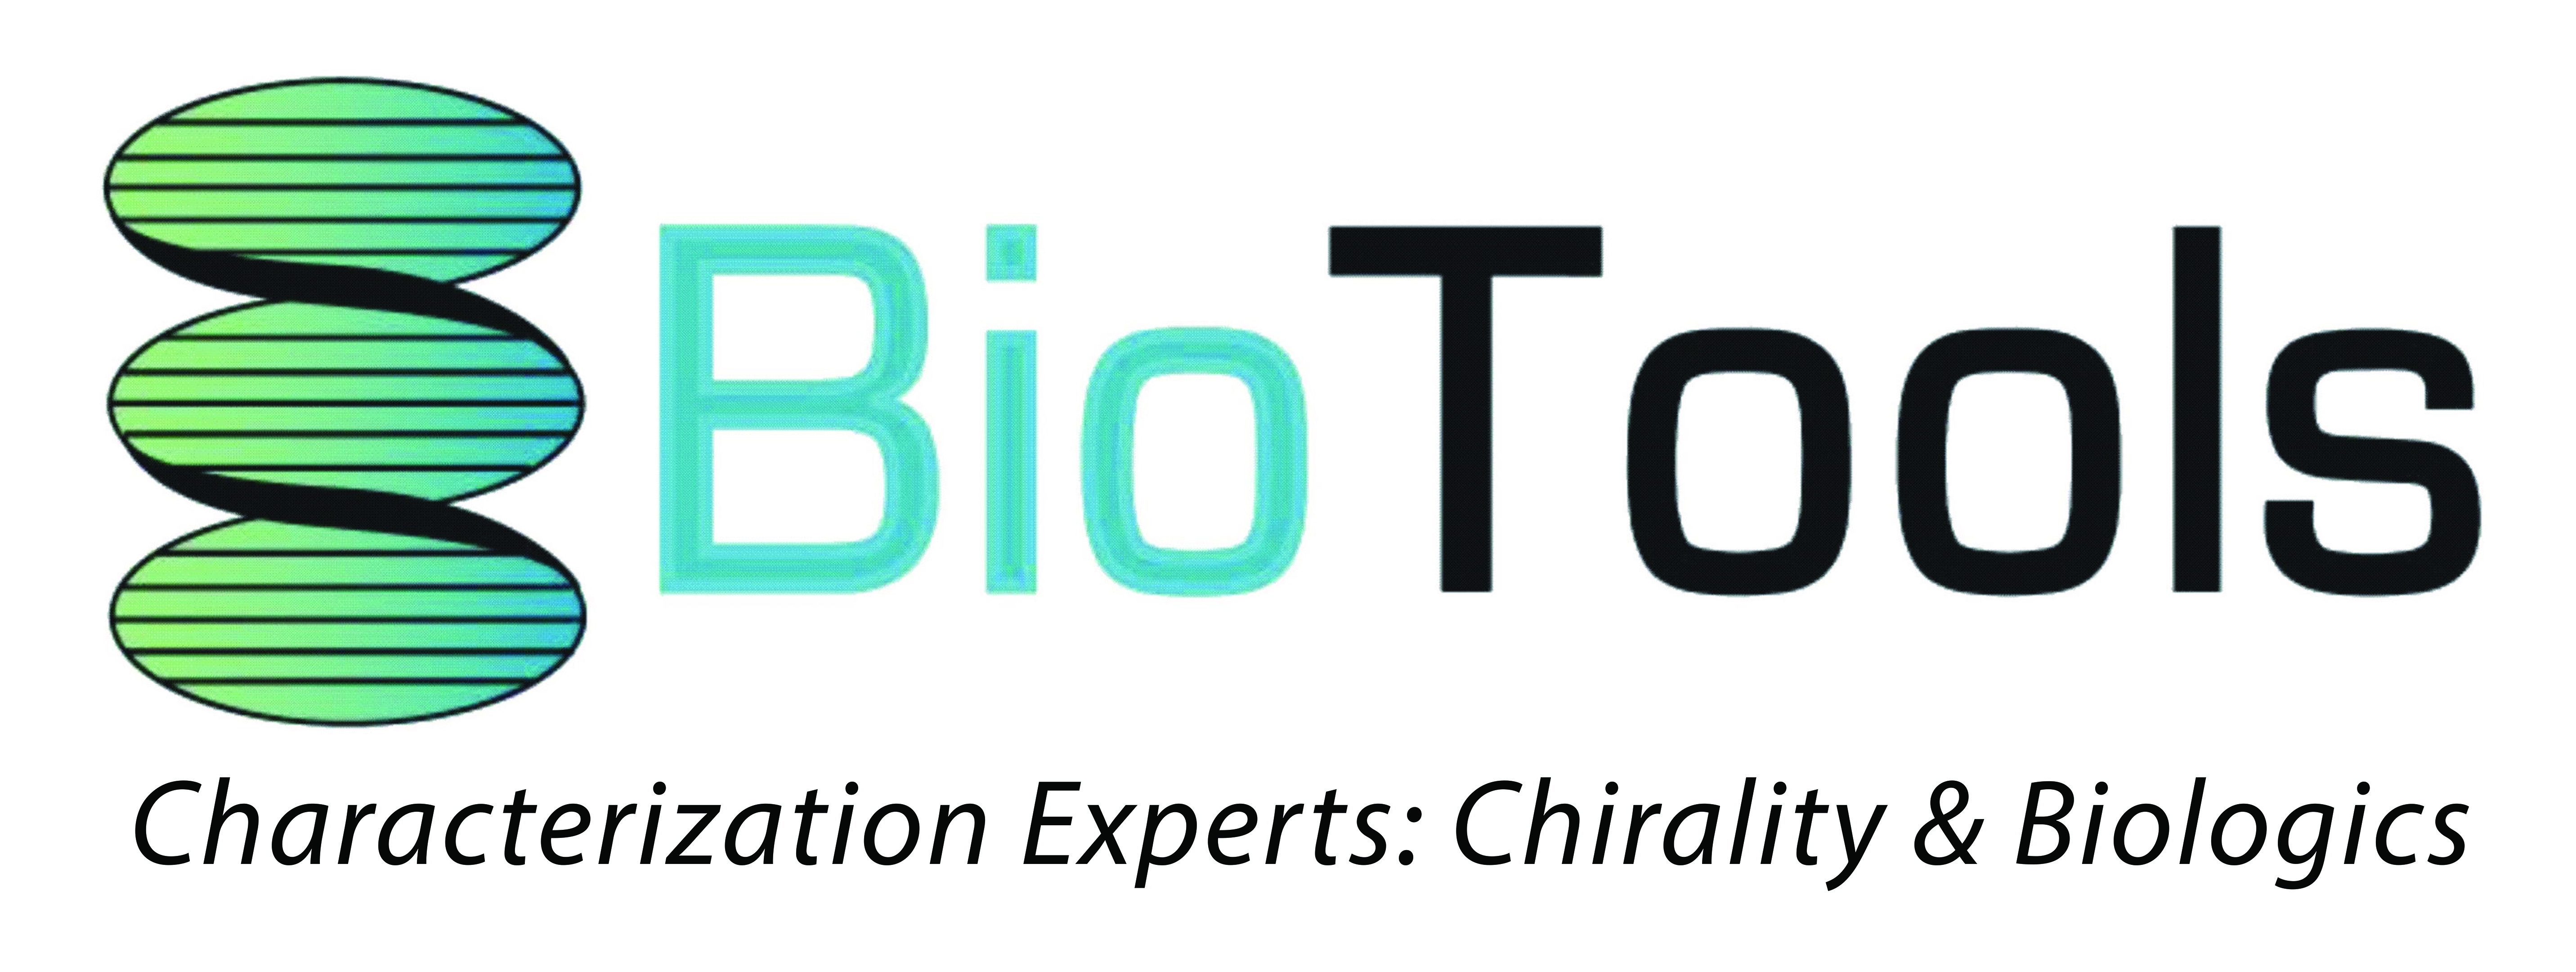 BTLogo_CharacterizationExpertsC&B_m